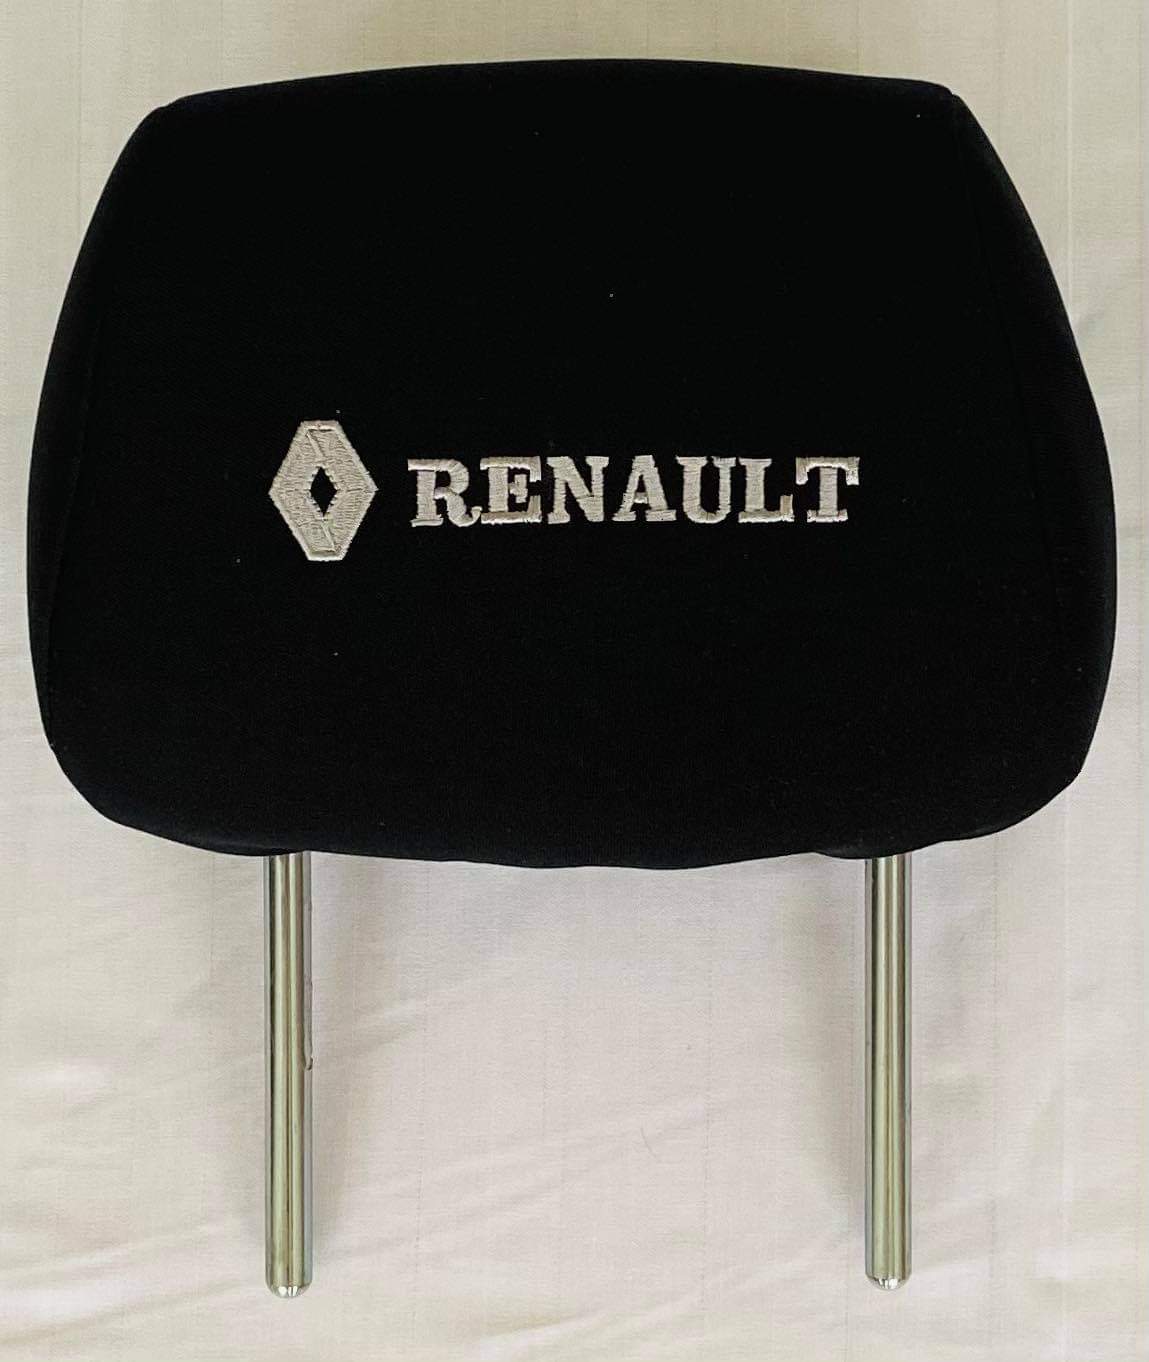 Čierne návleky na opierky hlavy s logom Renault - 2ks